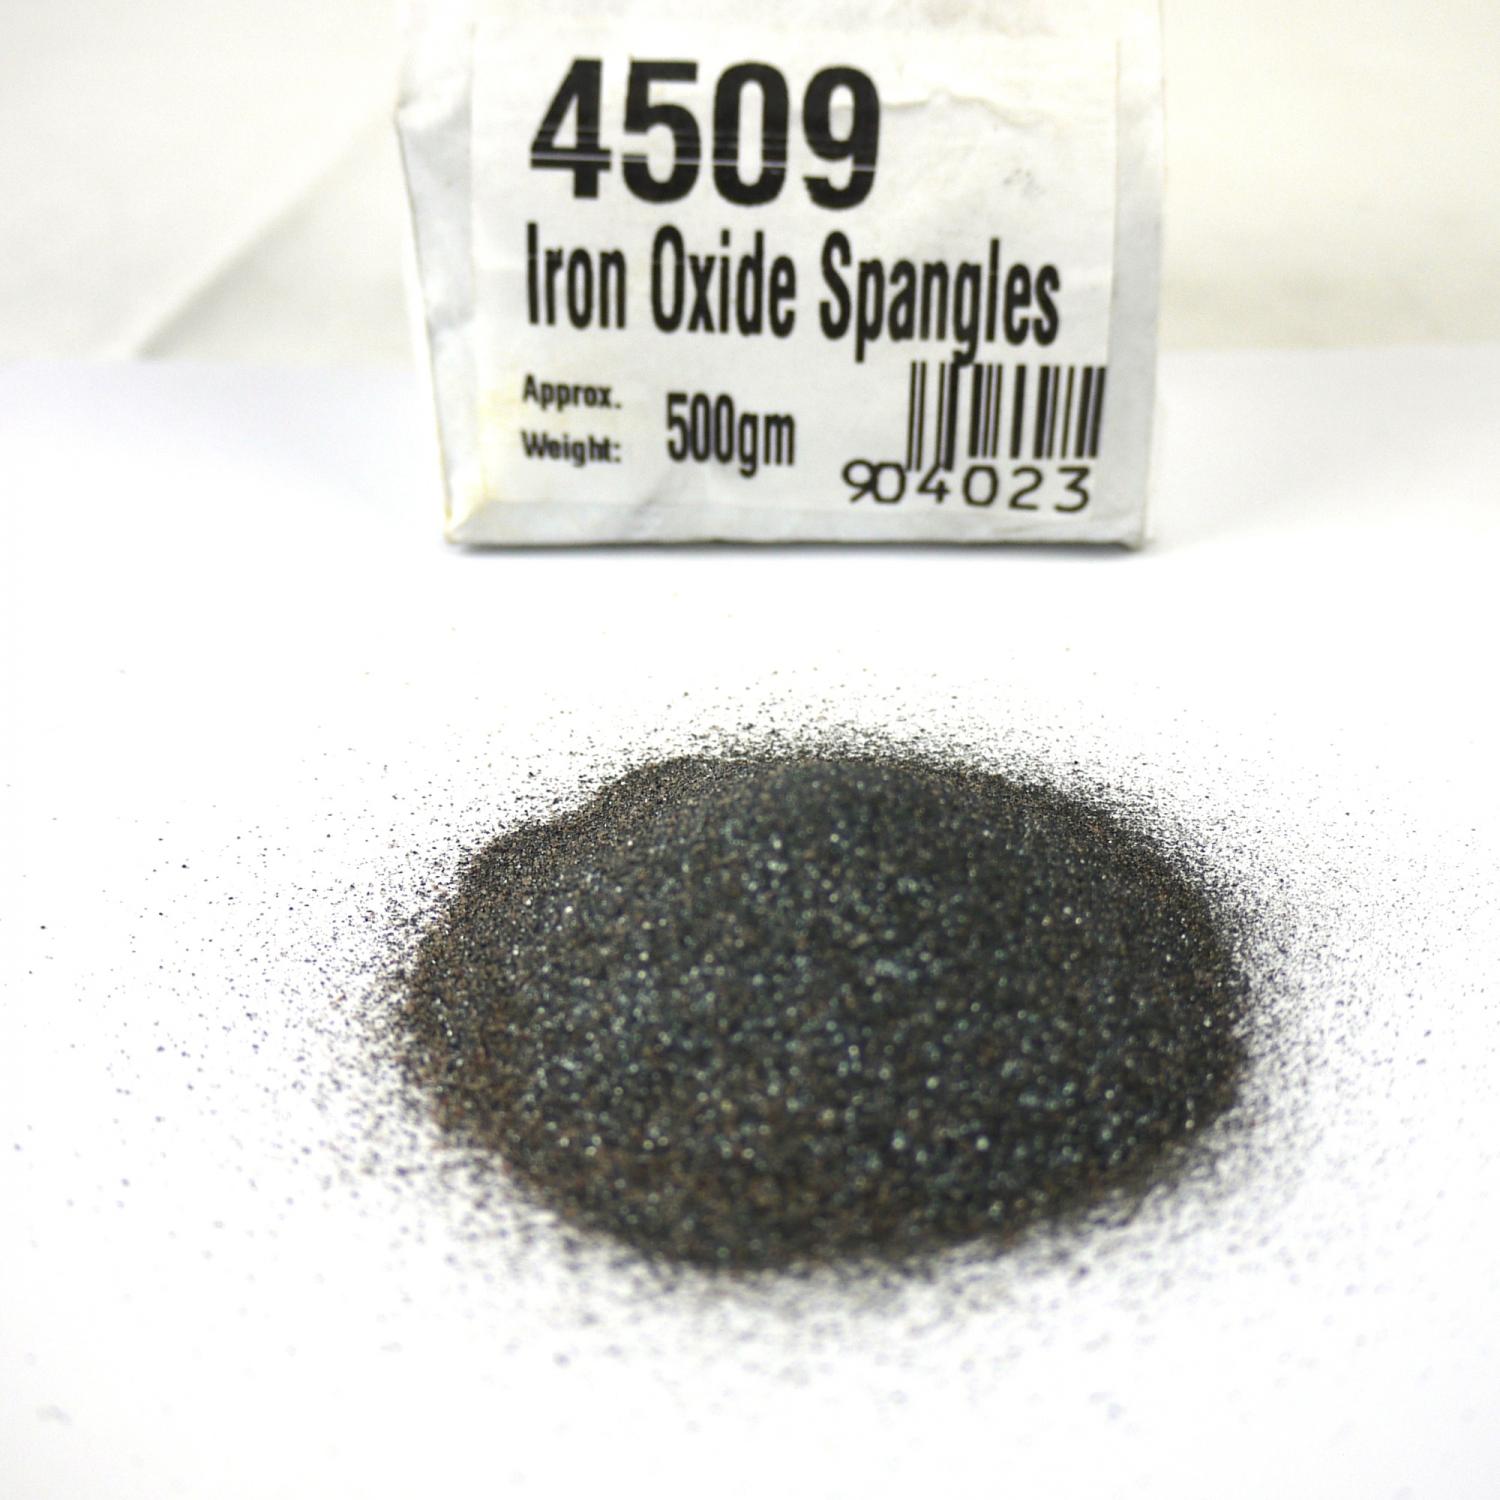 Iron Oxide Spangles :: Potclays Studio